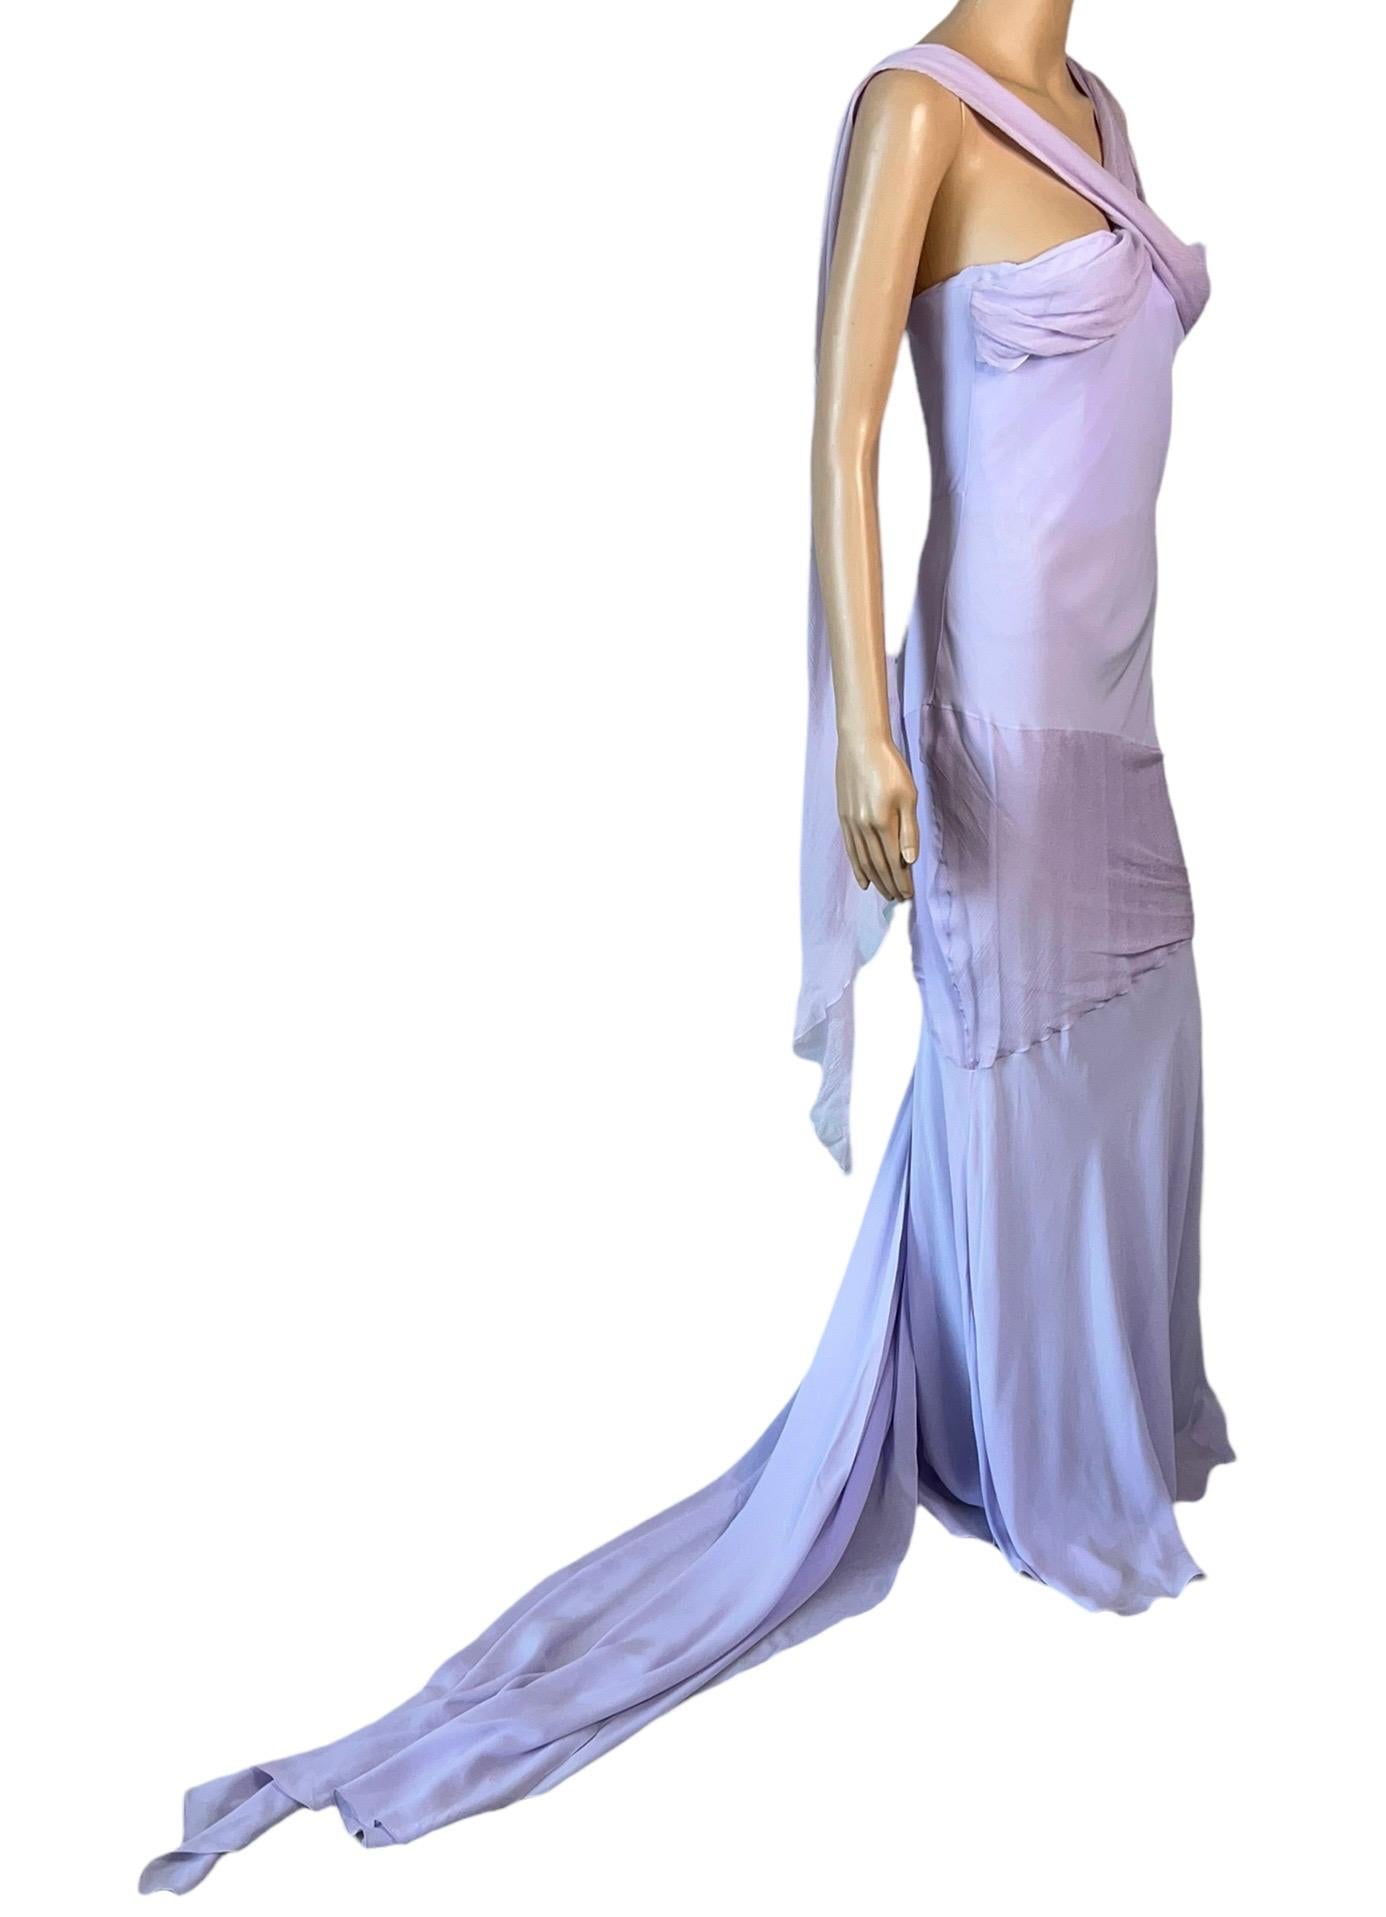 John Galliano S/S 2005 Unworn Bustier Bias Cut Silk Train Evening Dress Gown In New Condition For Sale In Naples, FL